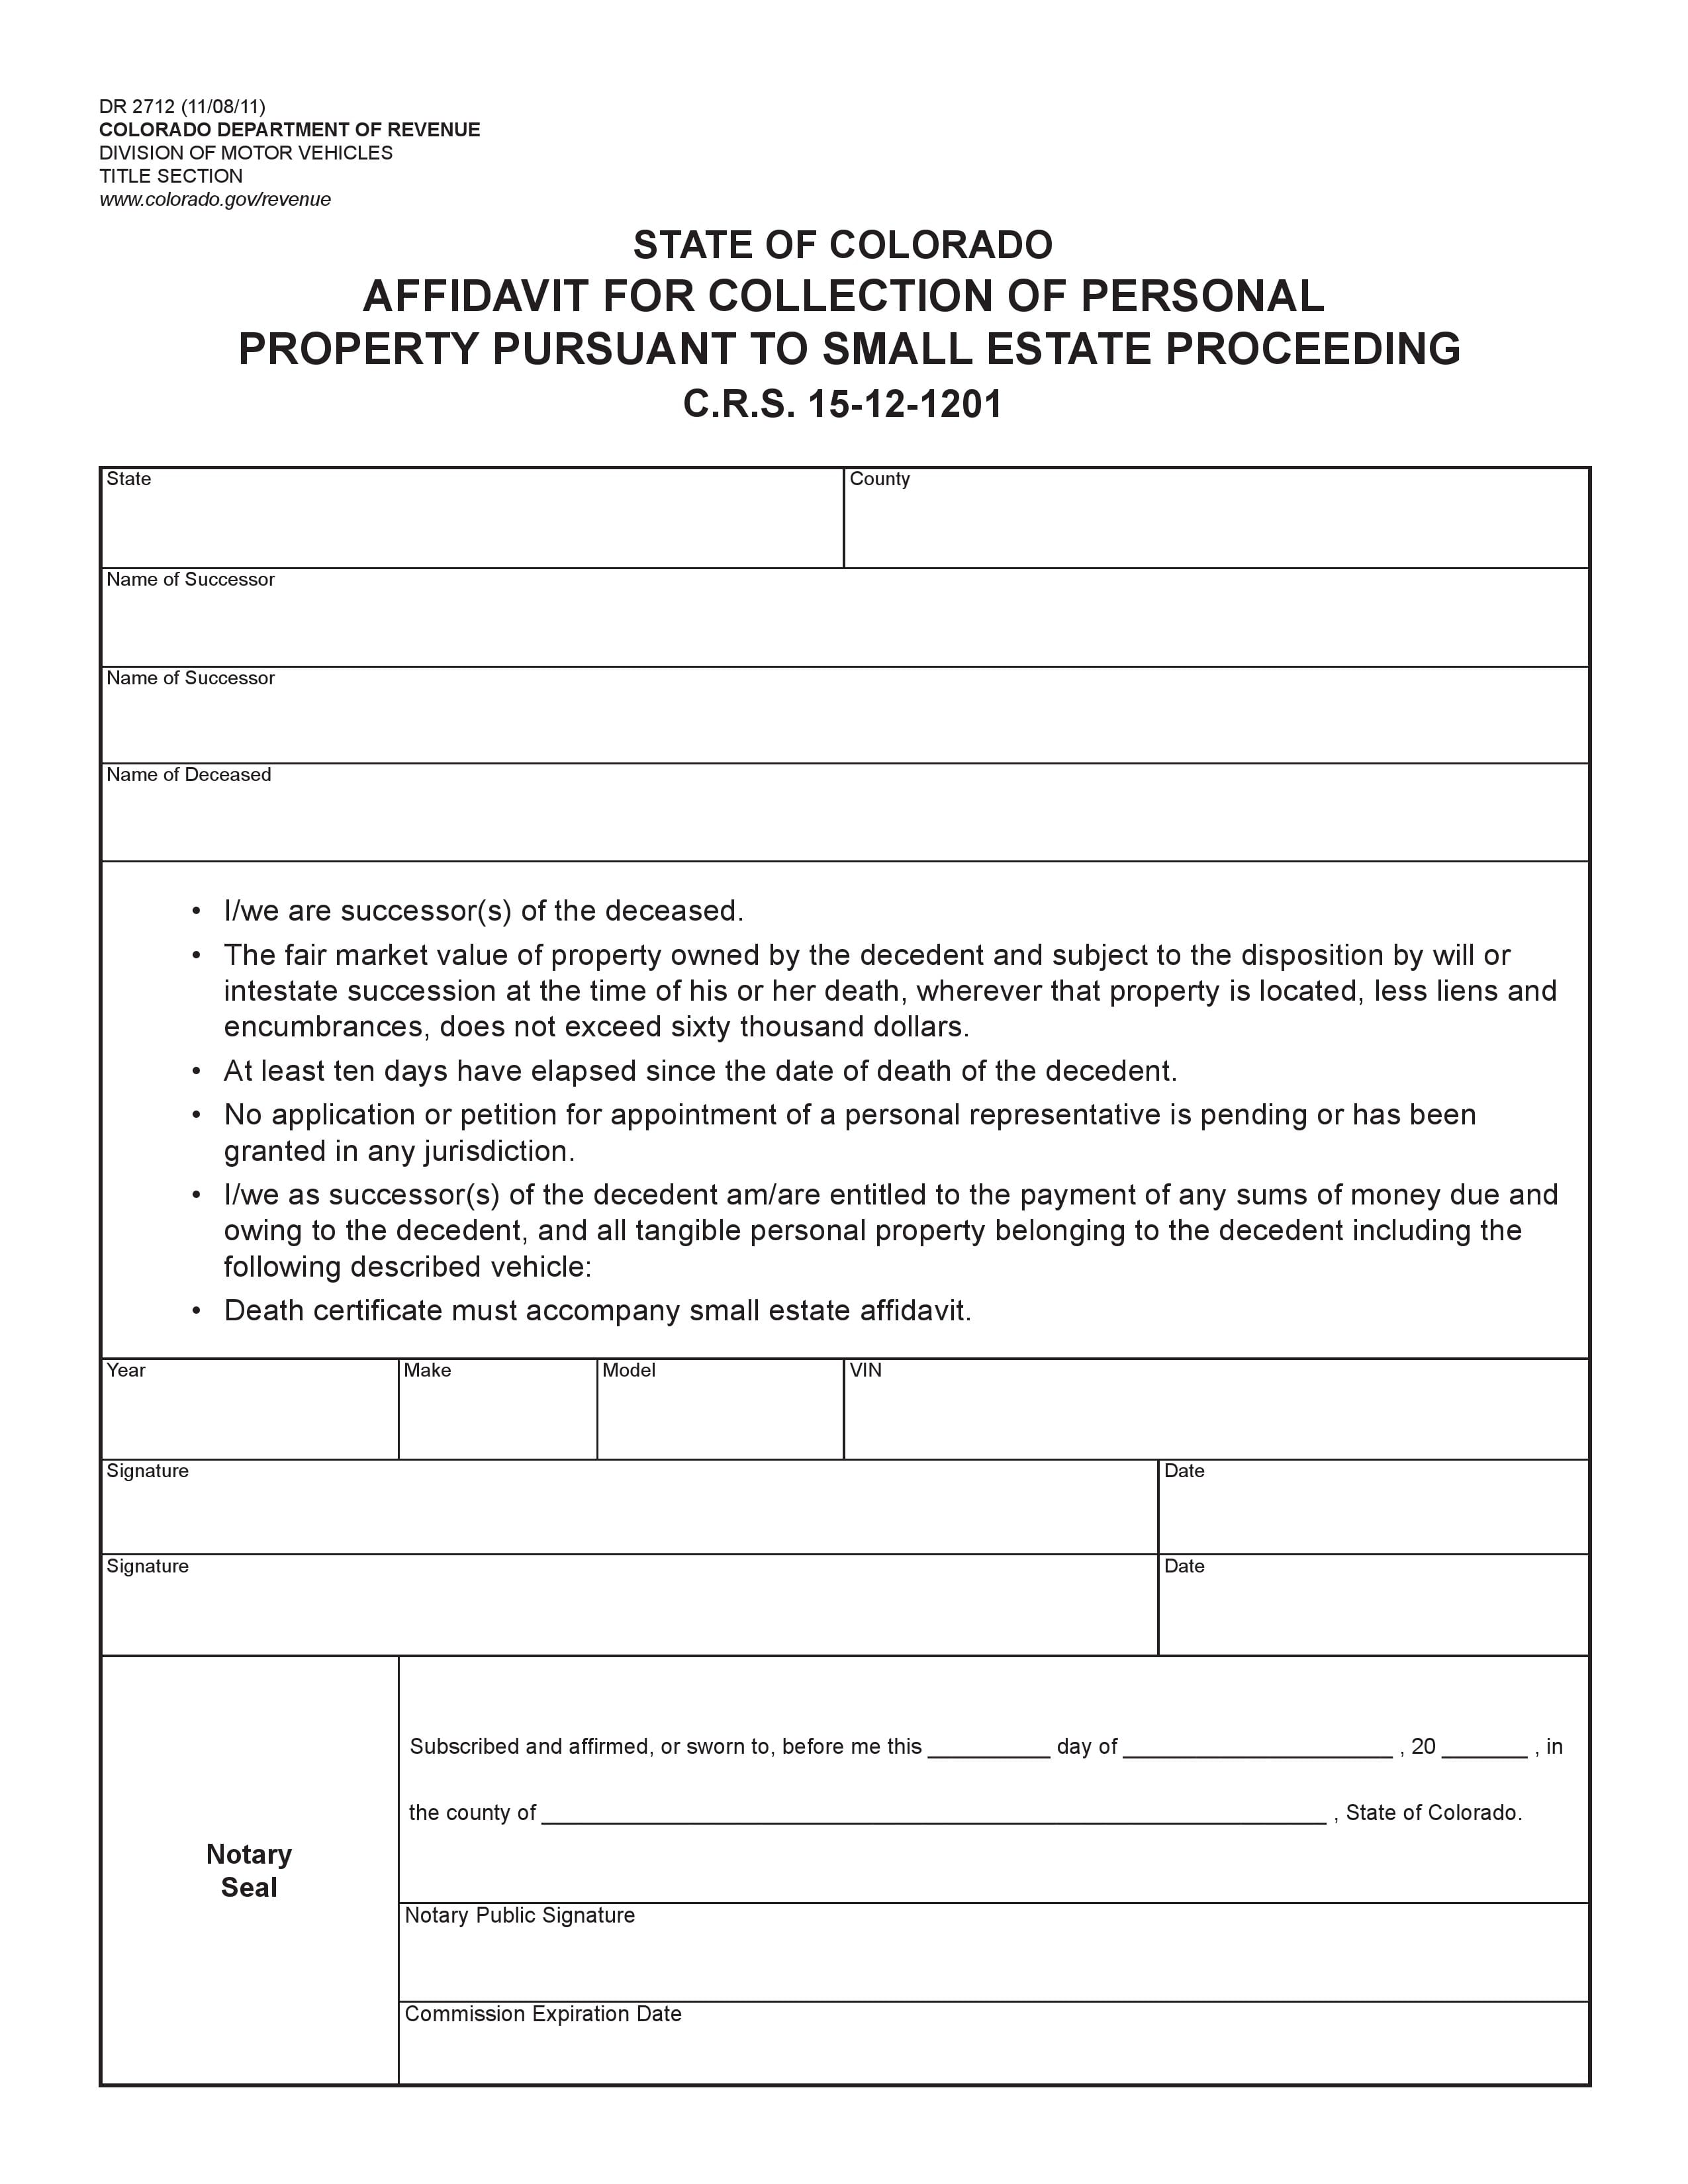 Colorado Small Estate Affidavit Form Dr2712